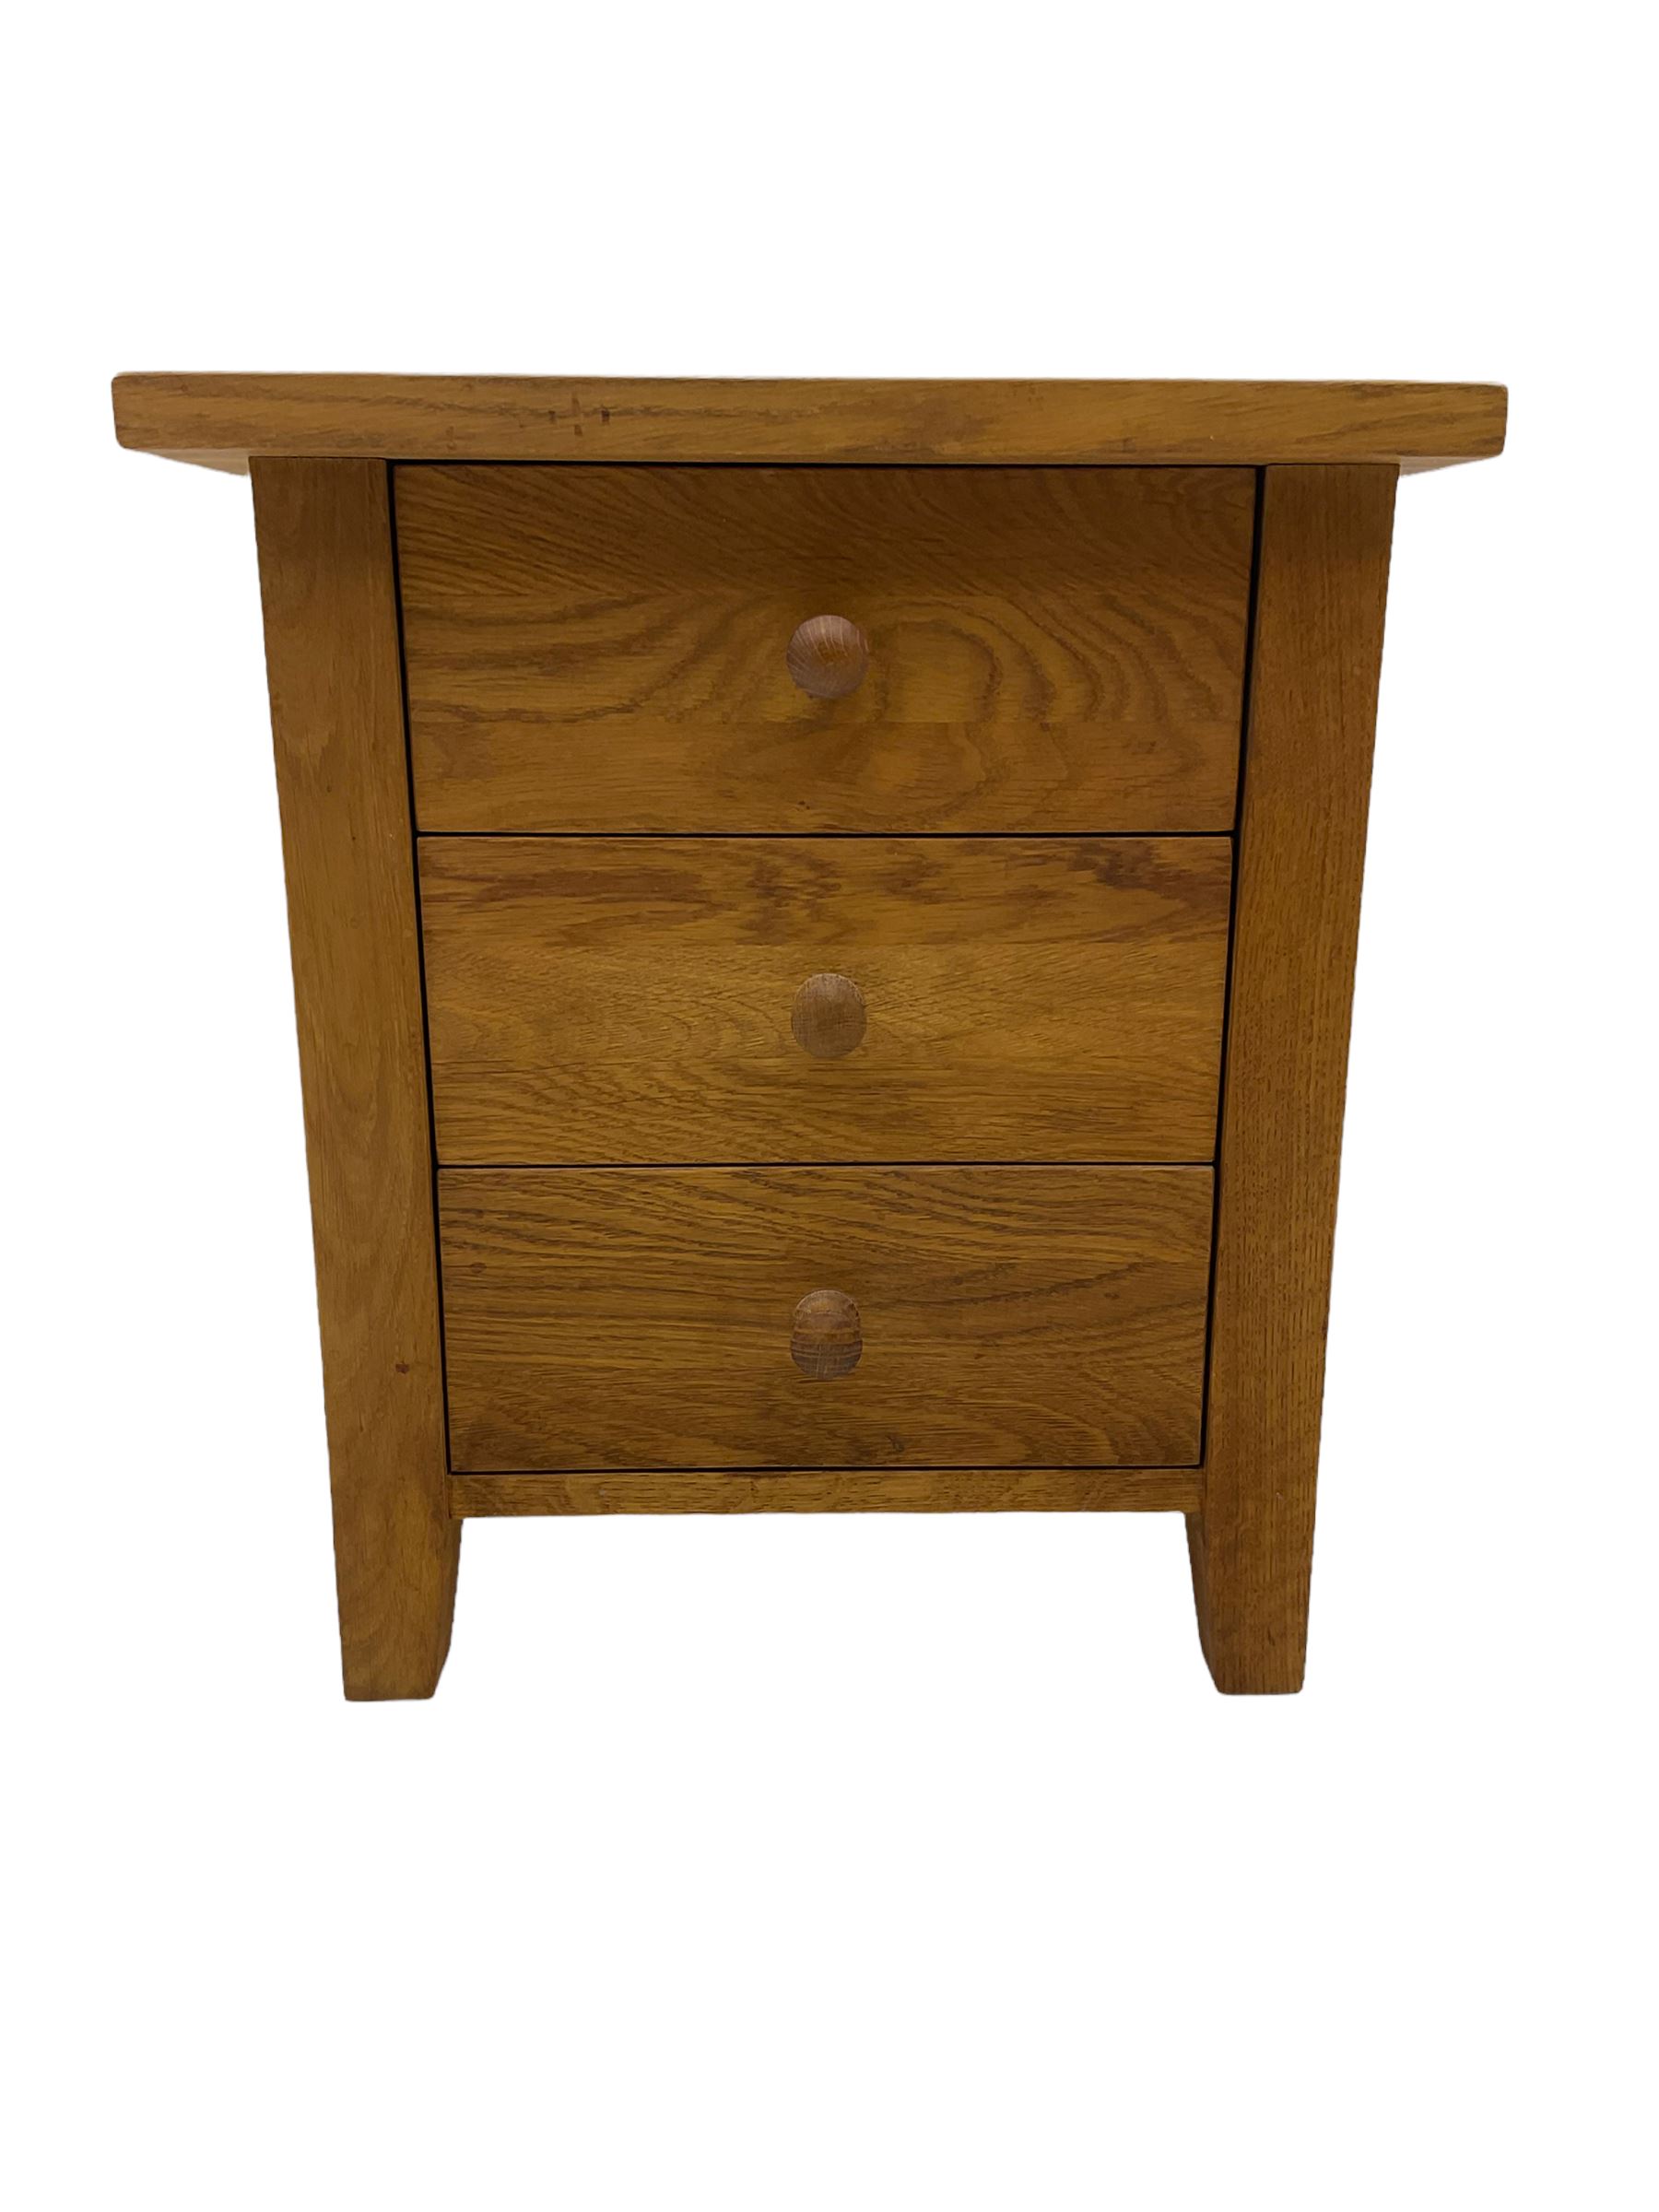 Small oak three drawer chest